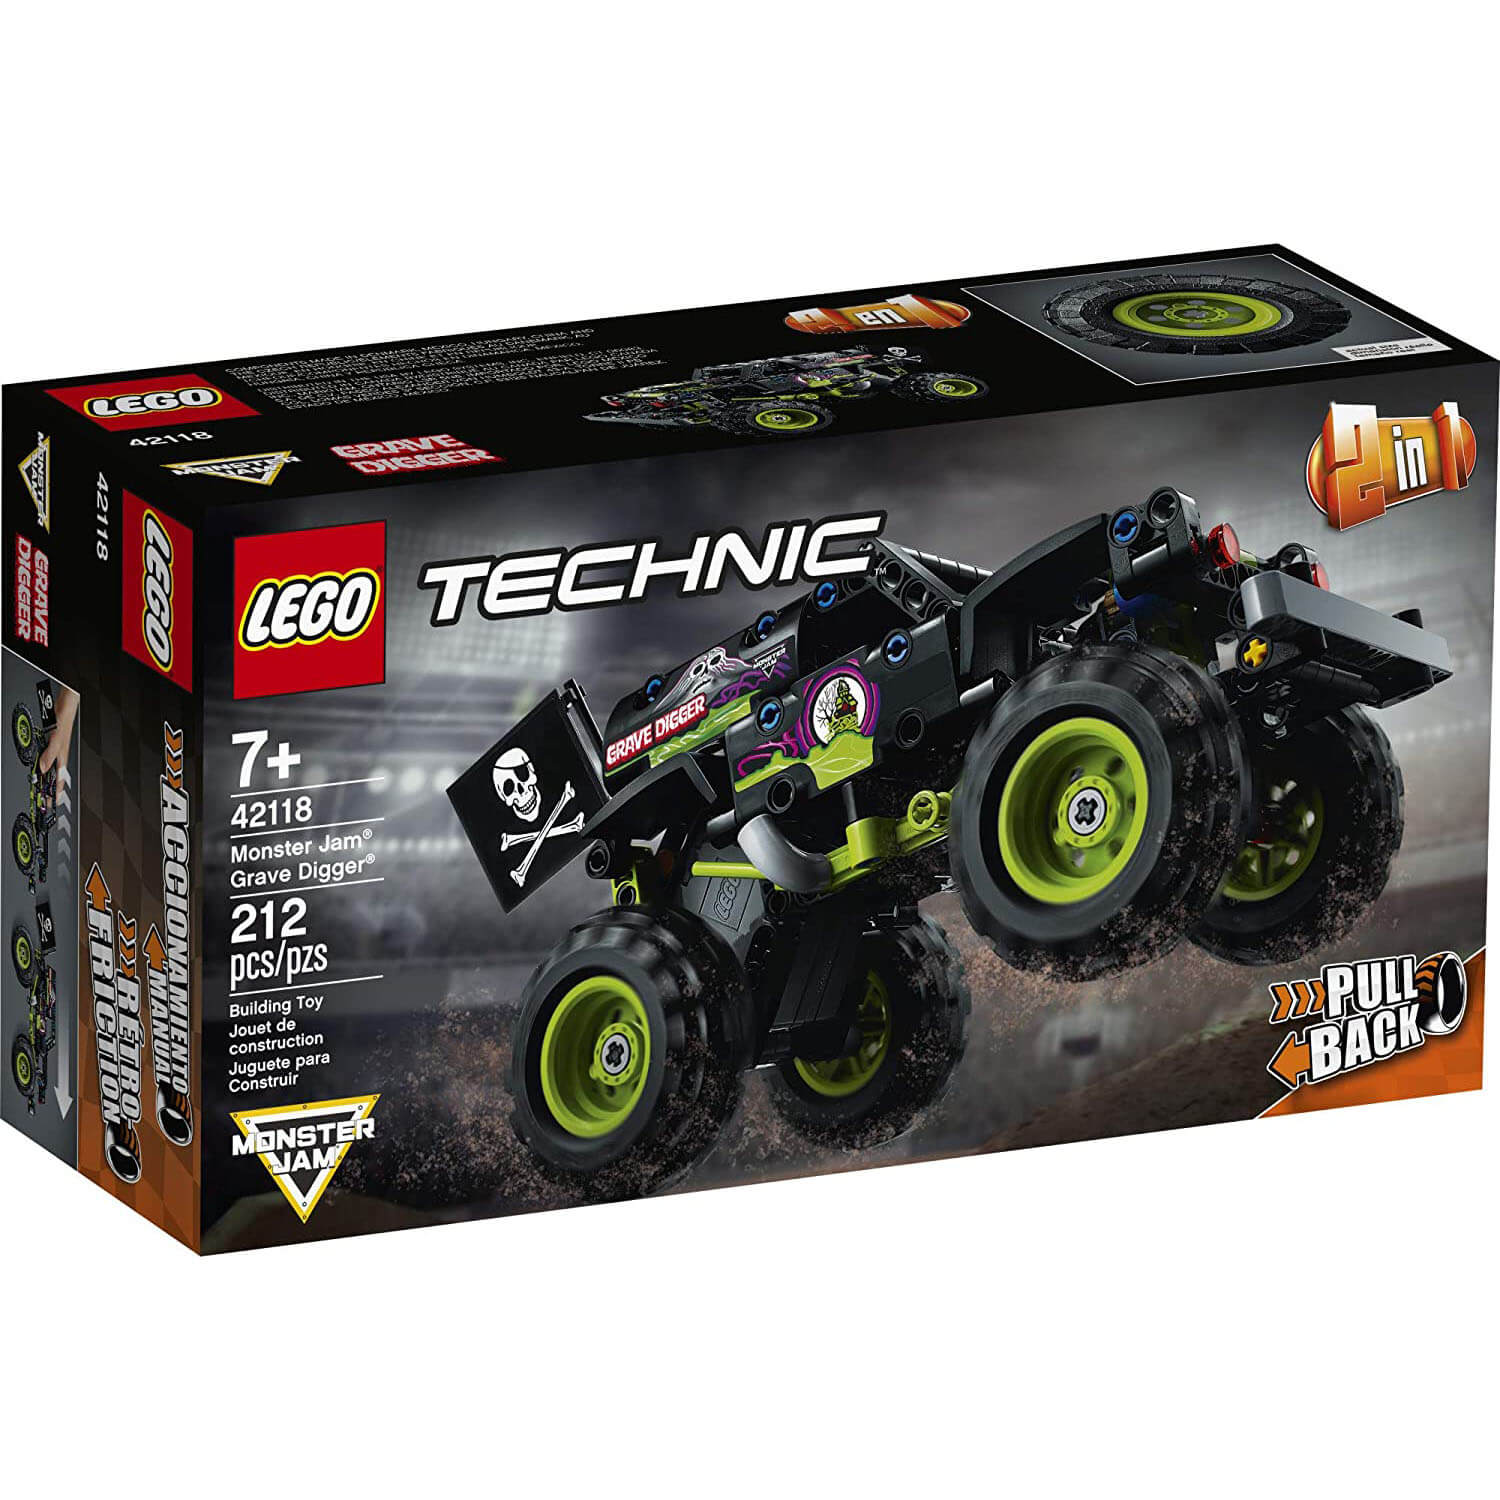 LEGO Technic Monster Jam Grave Digger 212 Piece Building Set (42118)